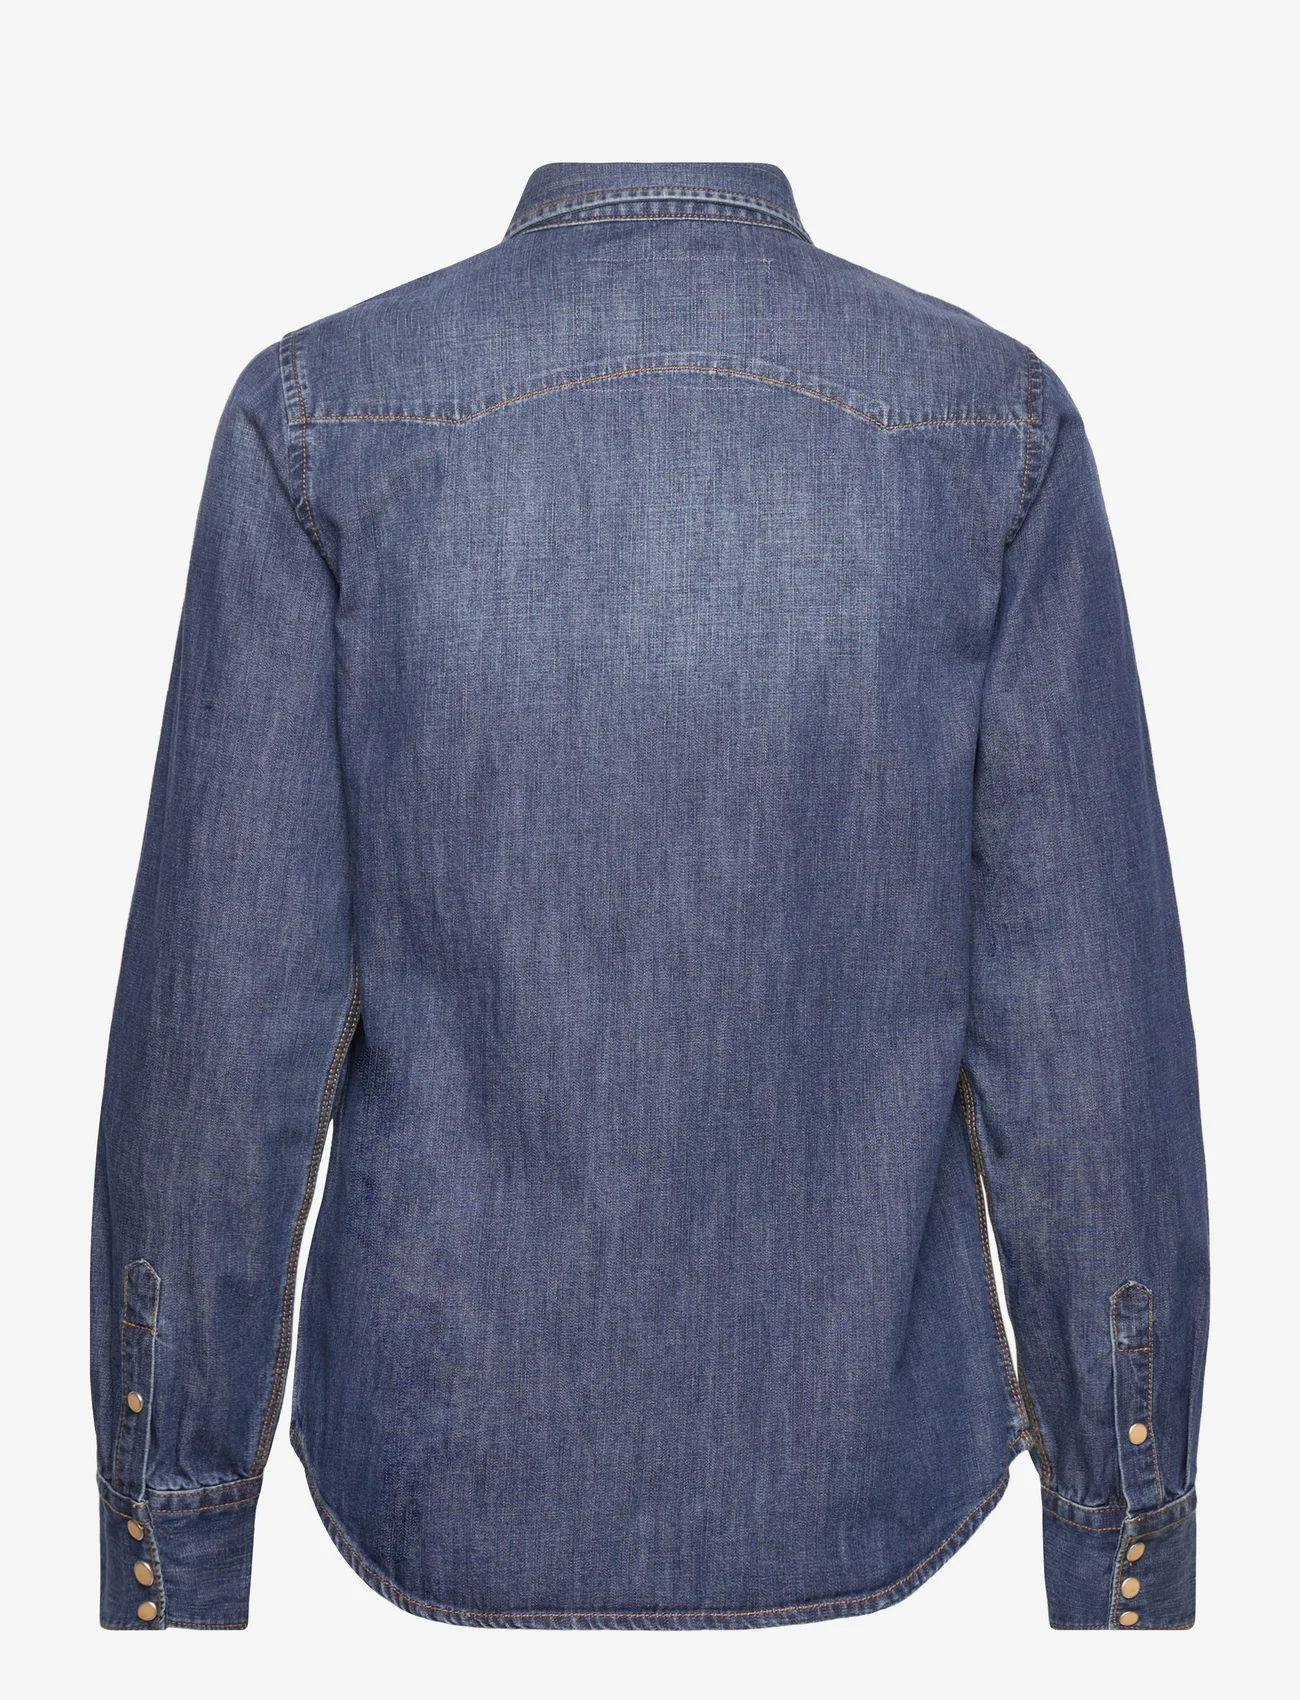 Replay - Shirt SLIM Rose Label Pack - koszule z długimi rękawami - blue - 1